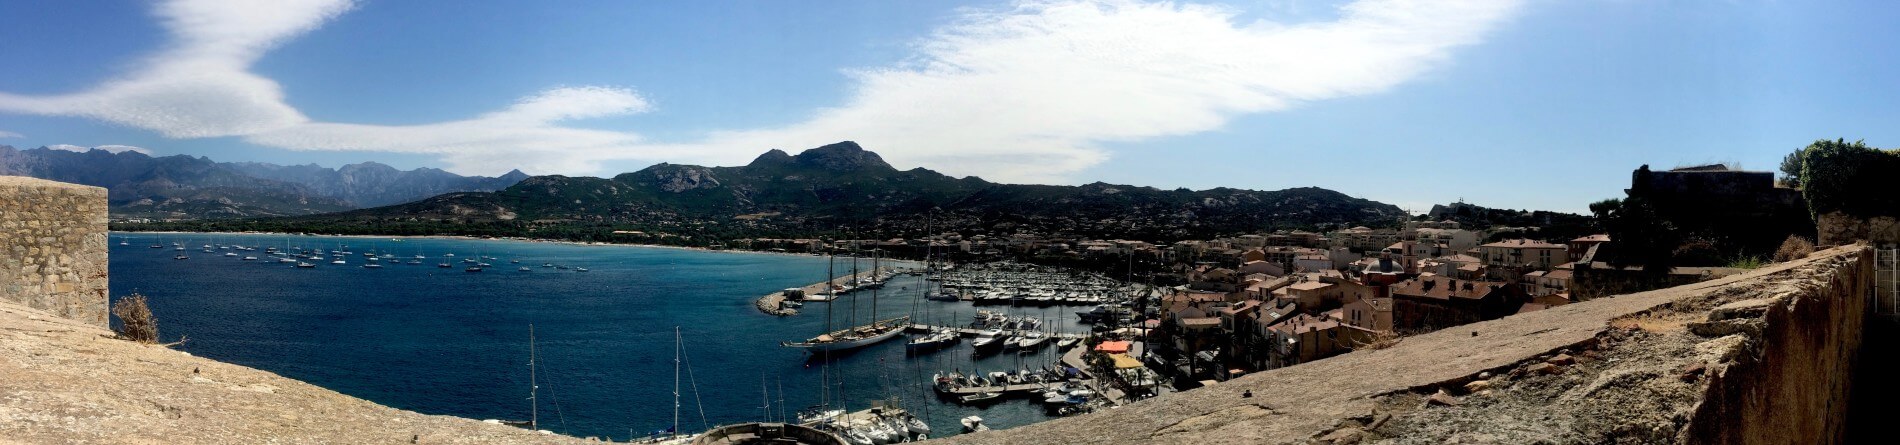 Sommerlager 2015 auf Korsika